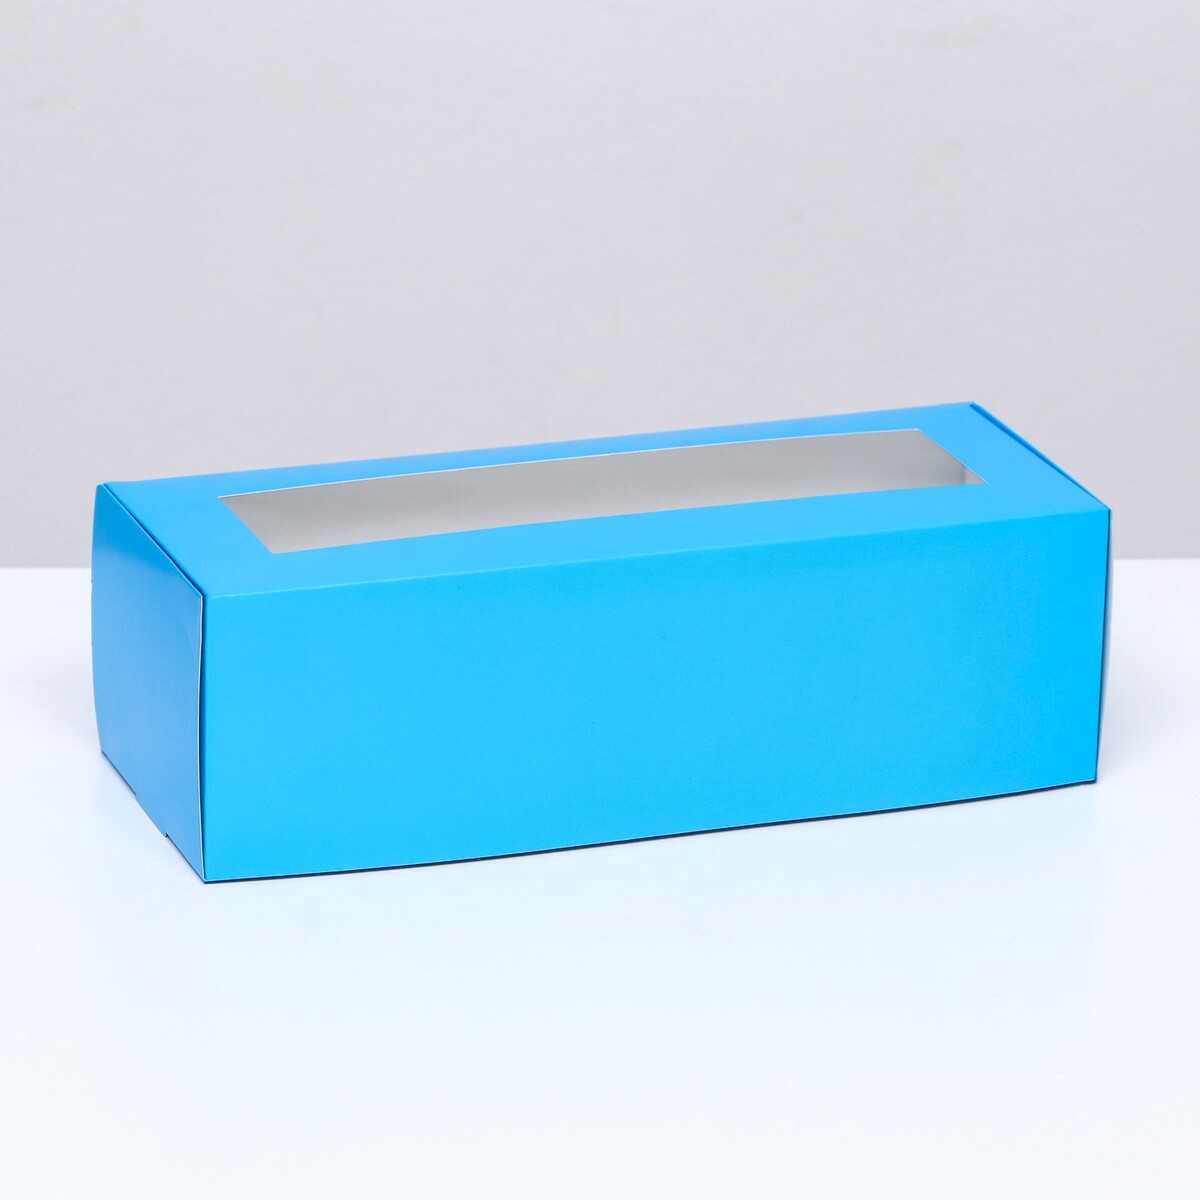 Коробка складная с окном под рулет, голубая, 26 х 10 х 8 см коробка под рулет с ручками белая 16 5 х 11 х 10 см